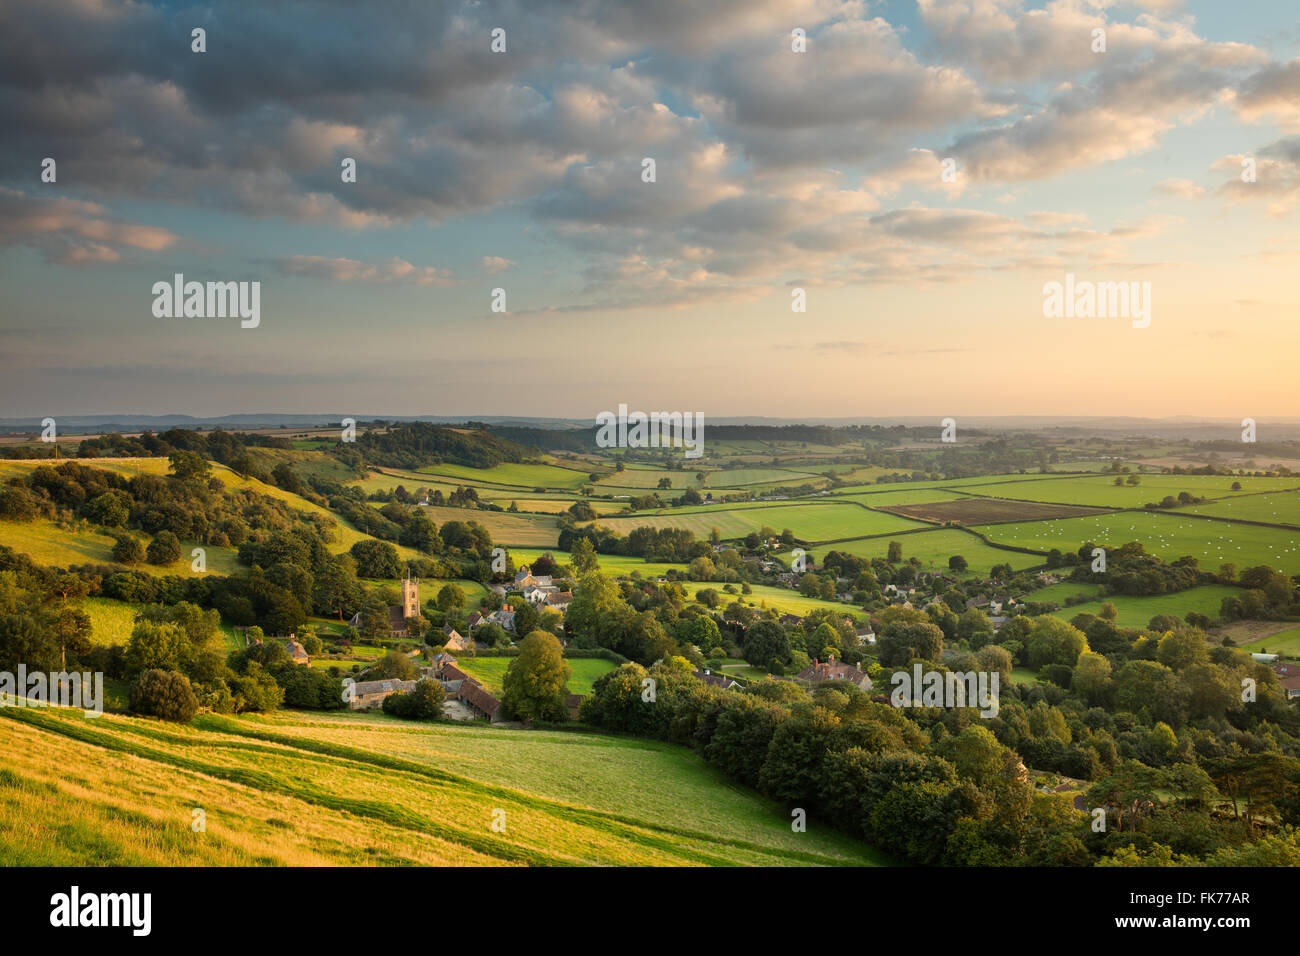 A view from the hillside looking over Corton Denham village, Sherborne, Droset, UK Stock Photo